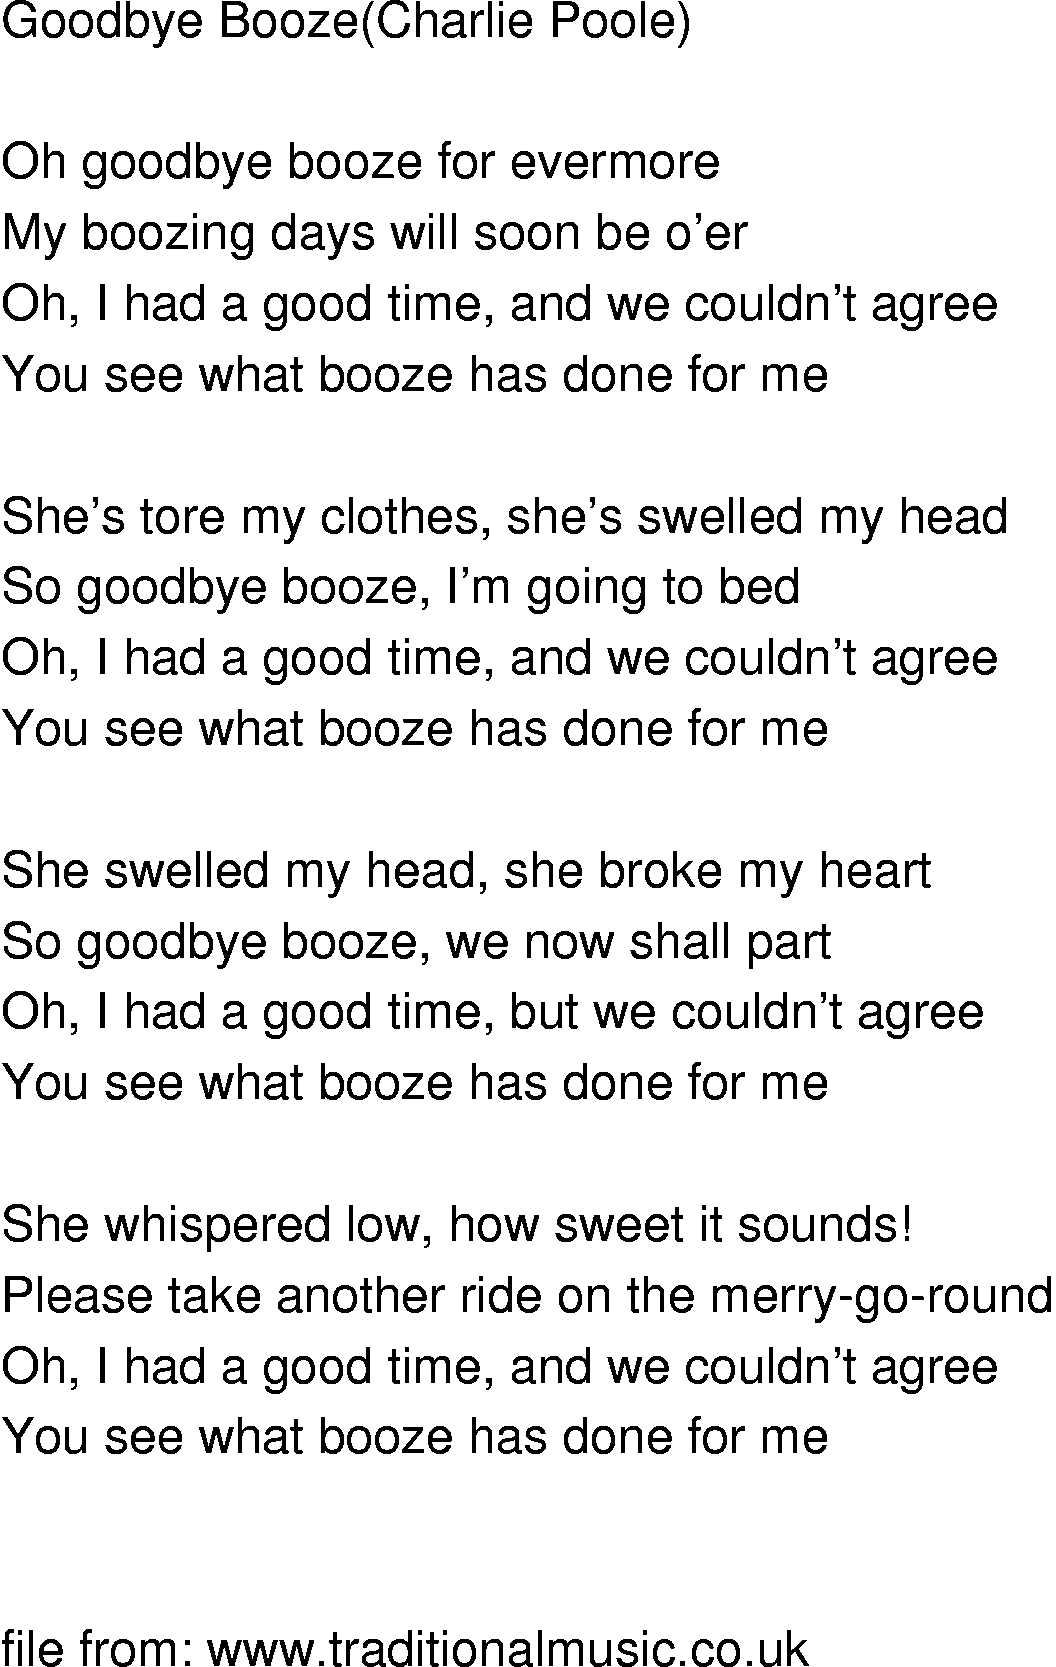 Old-Time (oldtimey) Song Lyrics - goodbye booze